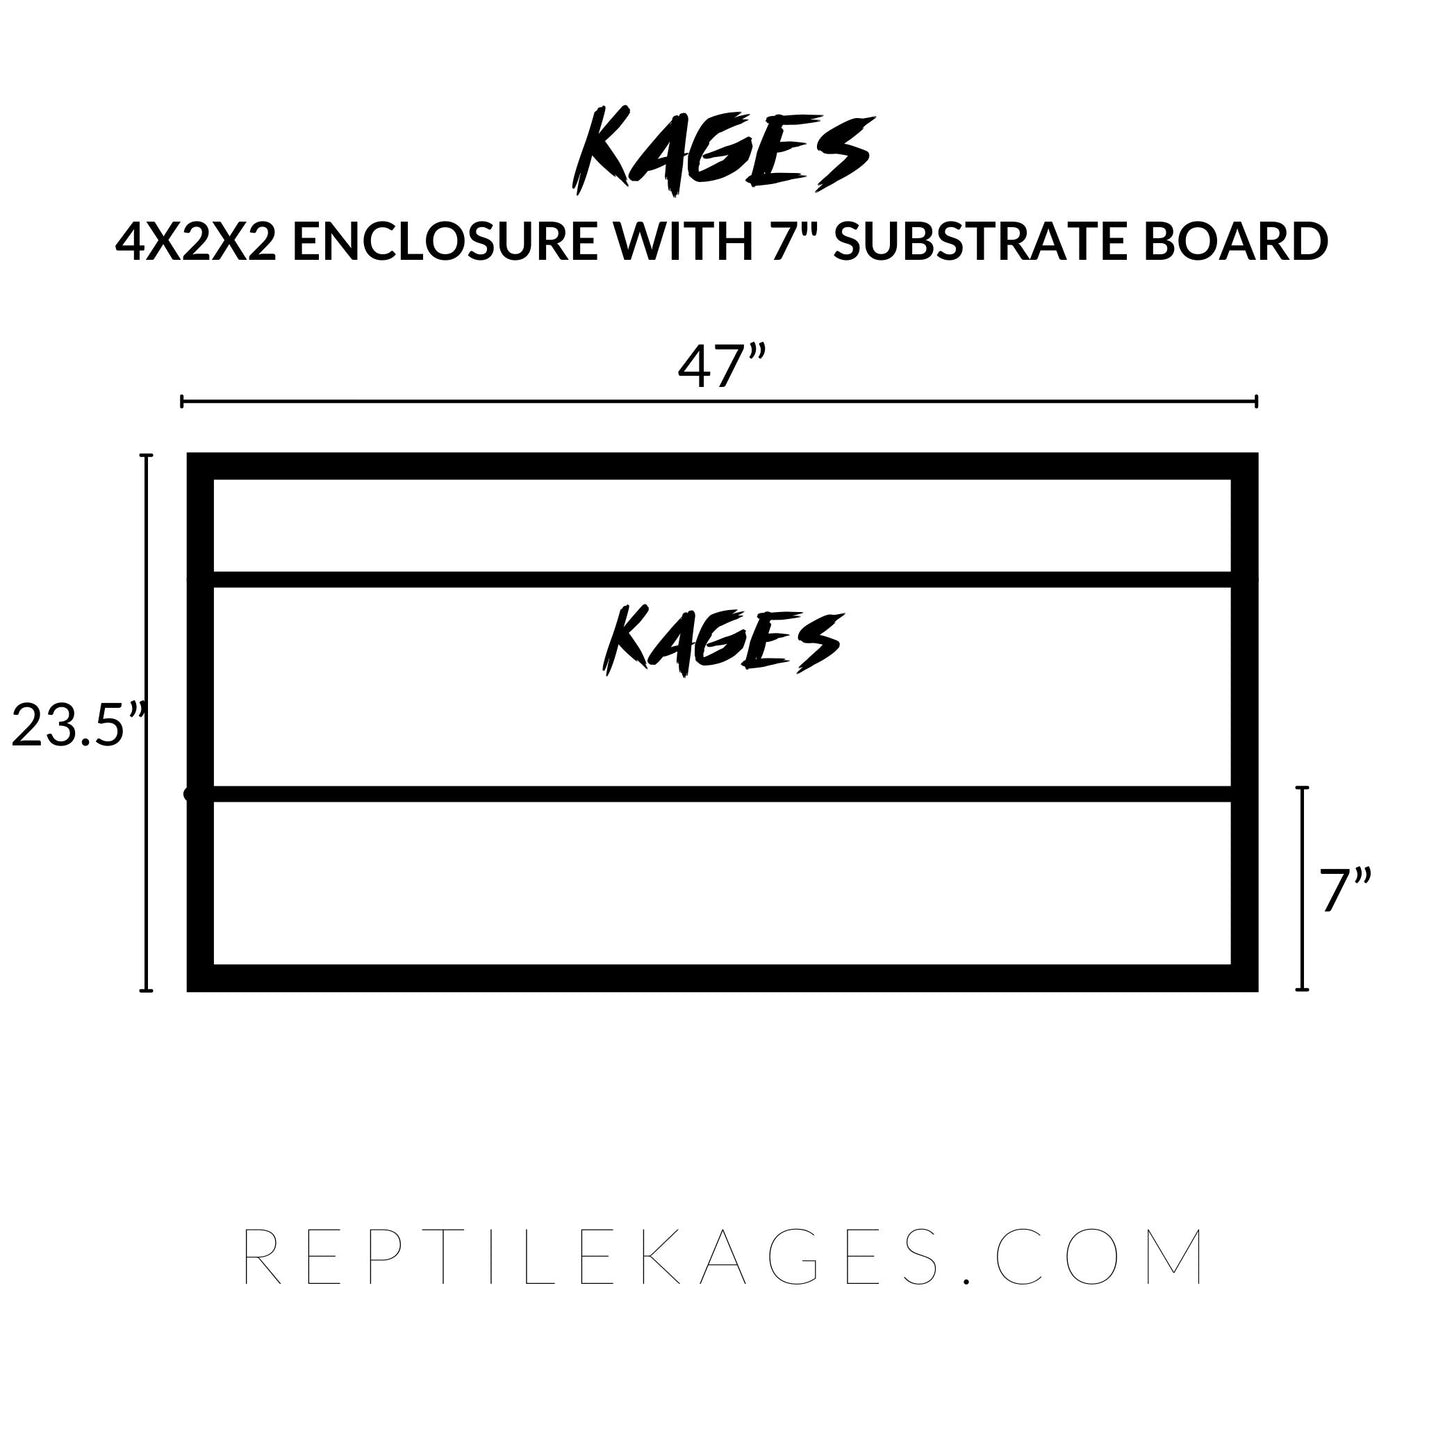 48"x24"x24" / 4'x2'x2' with 7" Substrate Board Premium PVC Reptile Enclosure